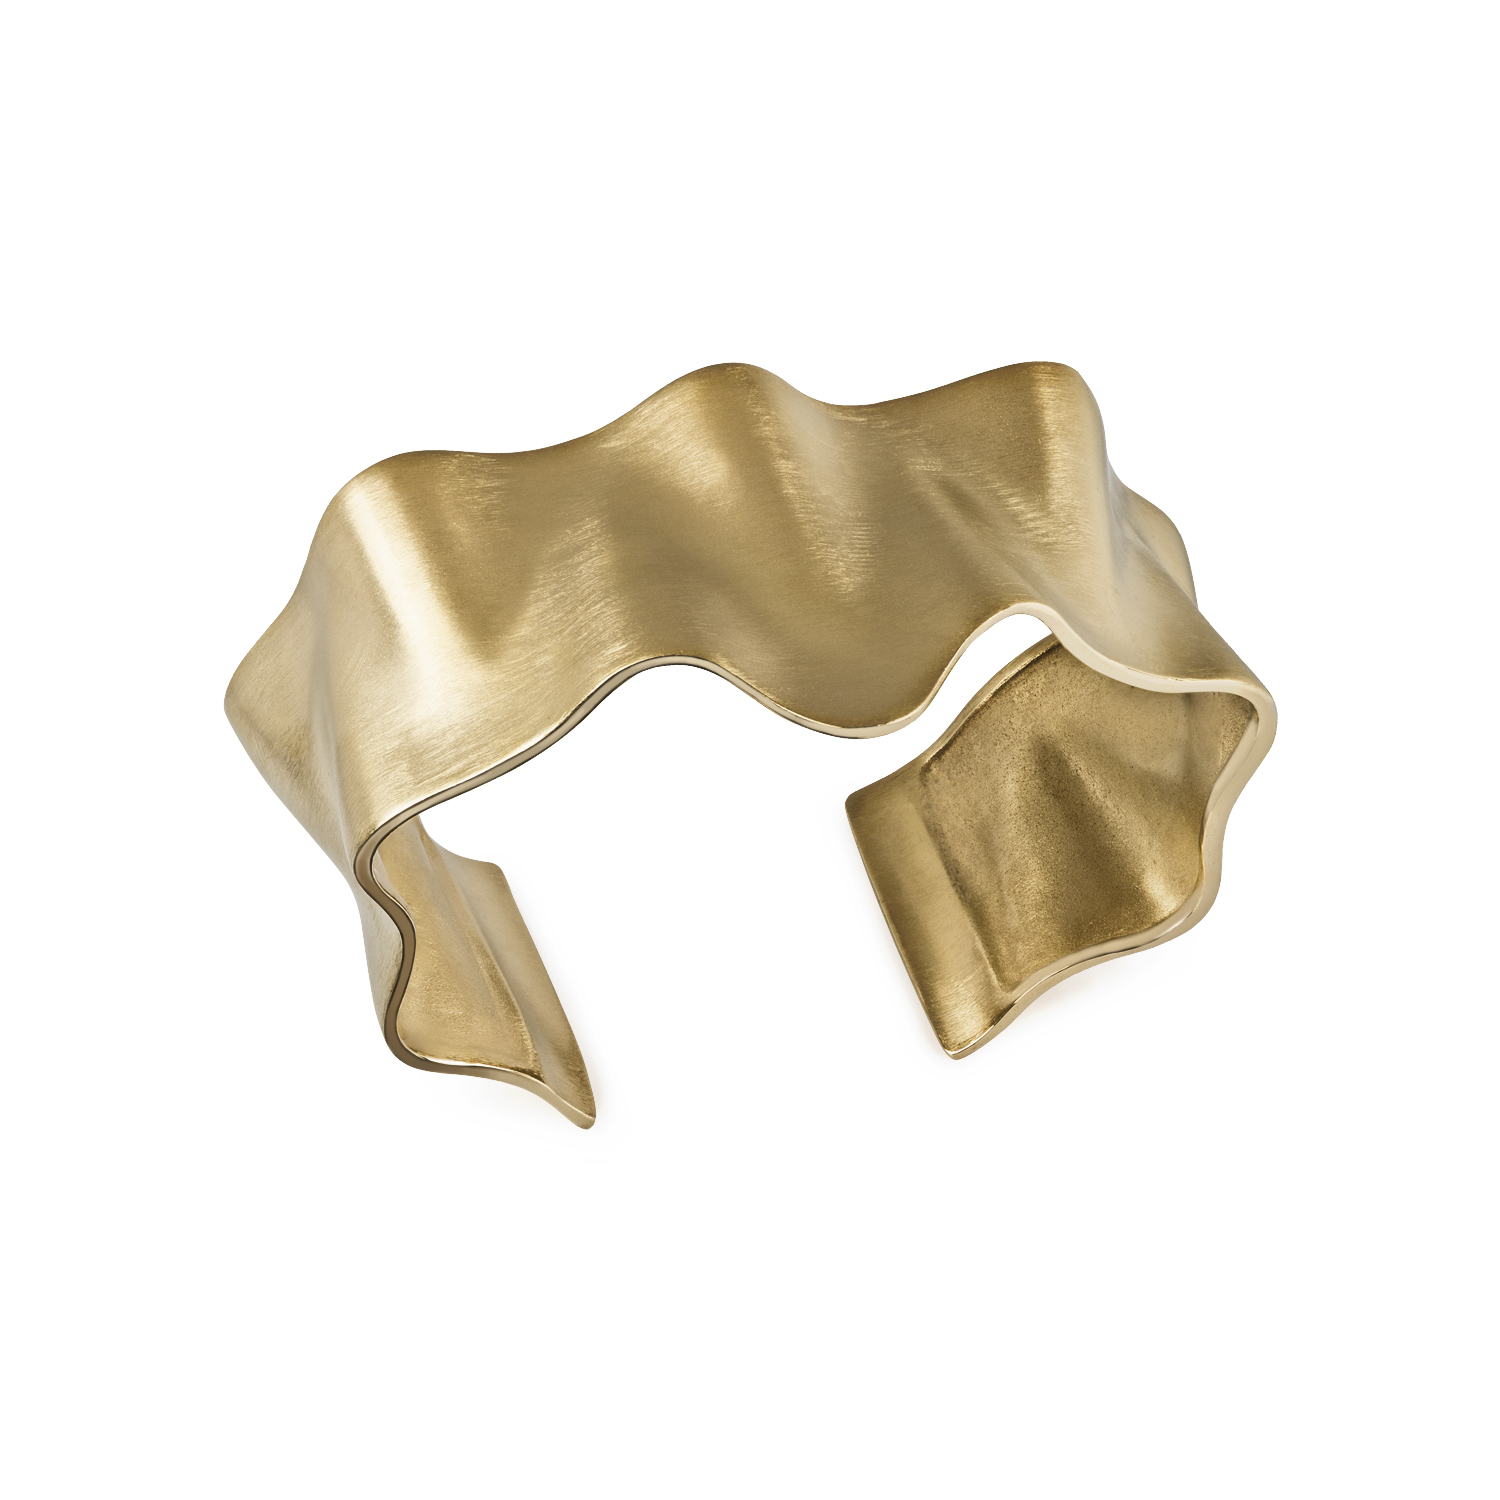 Gold plated roof bracelet